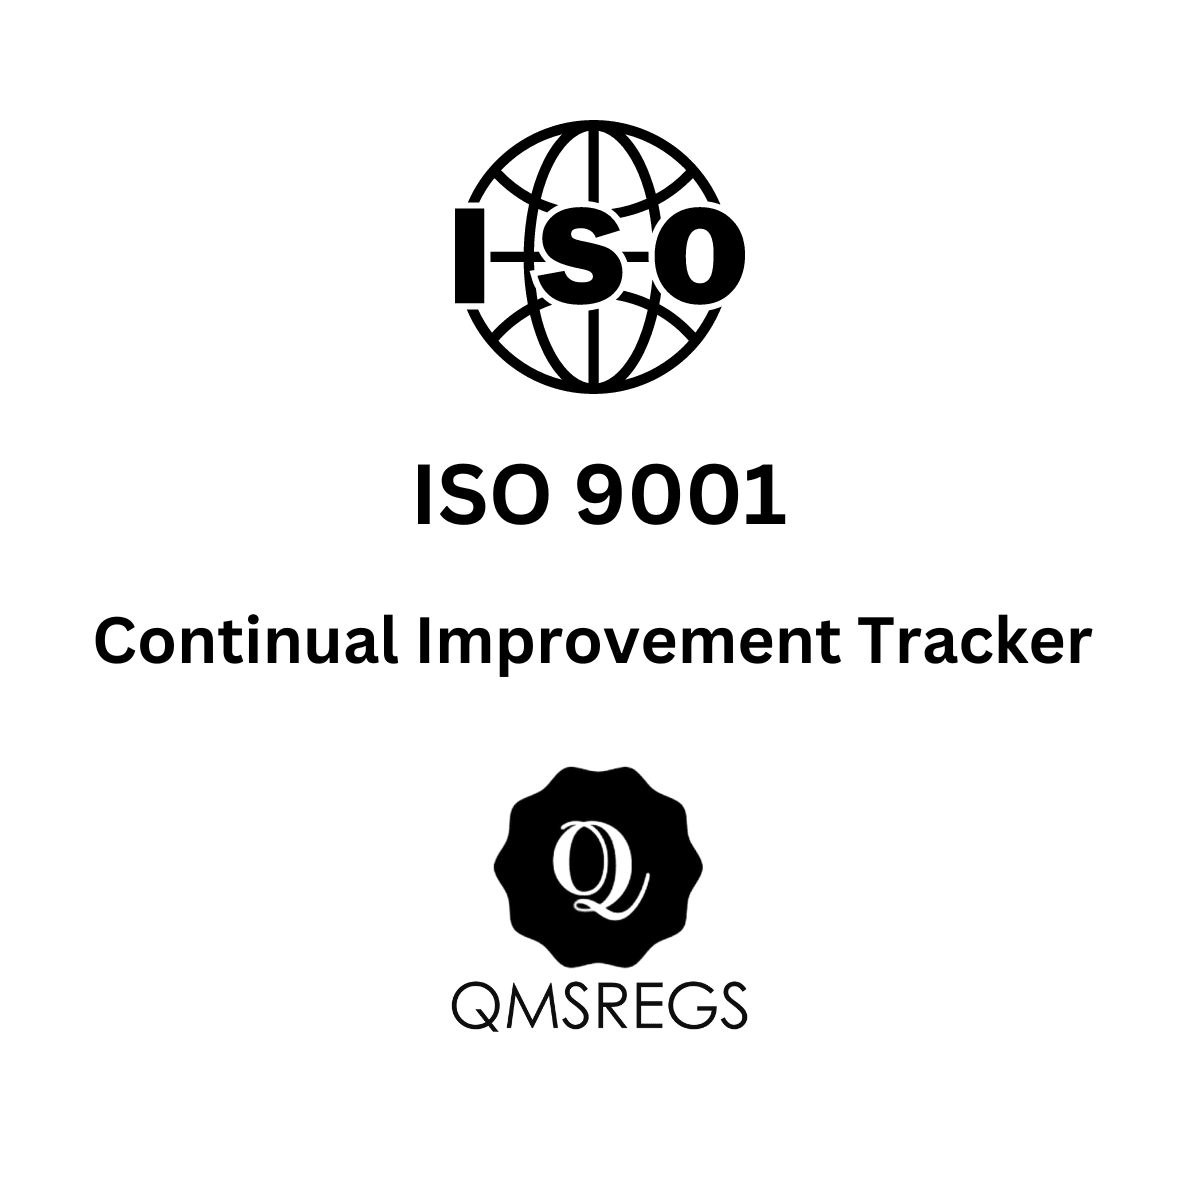 ISO 9001 Continual Improvement Tracker Template